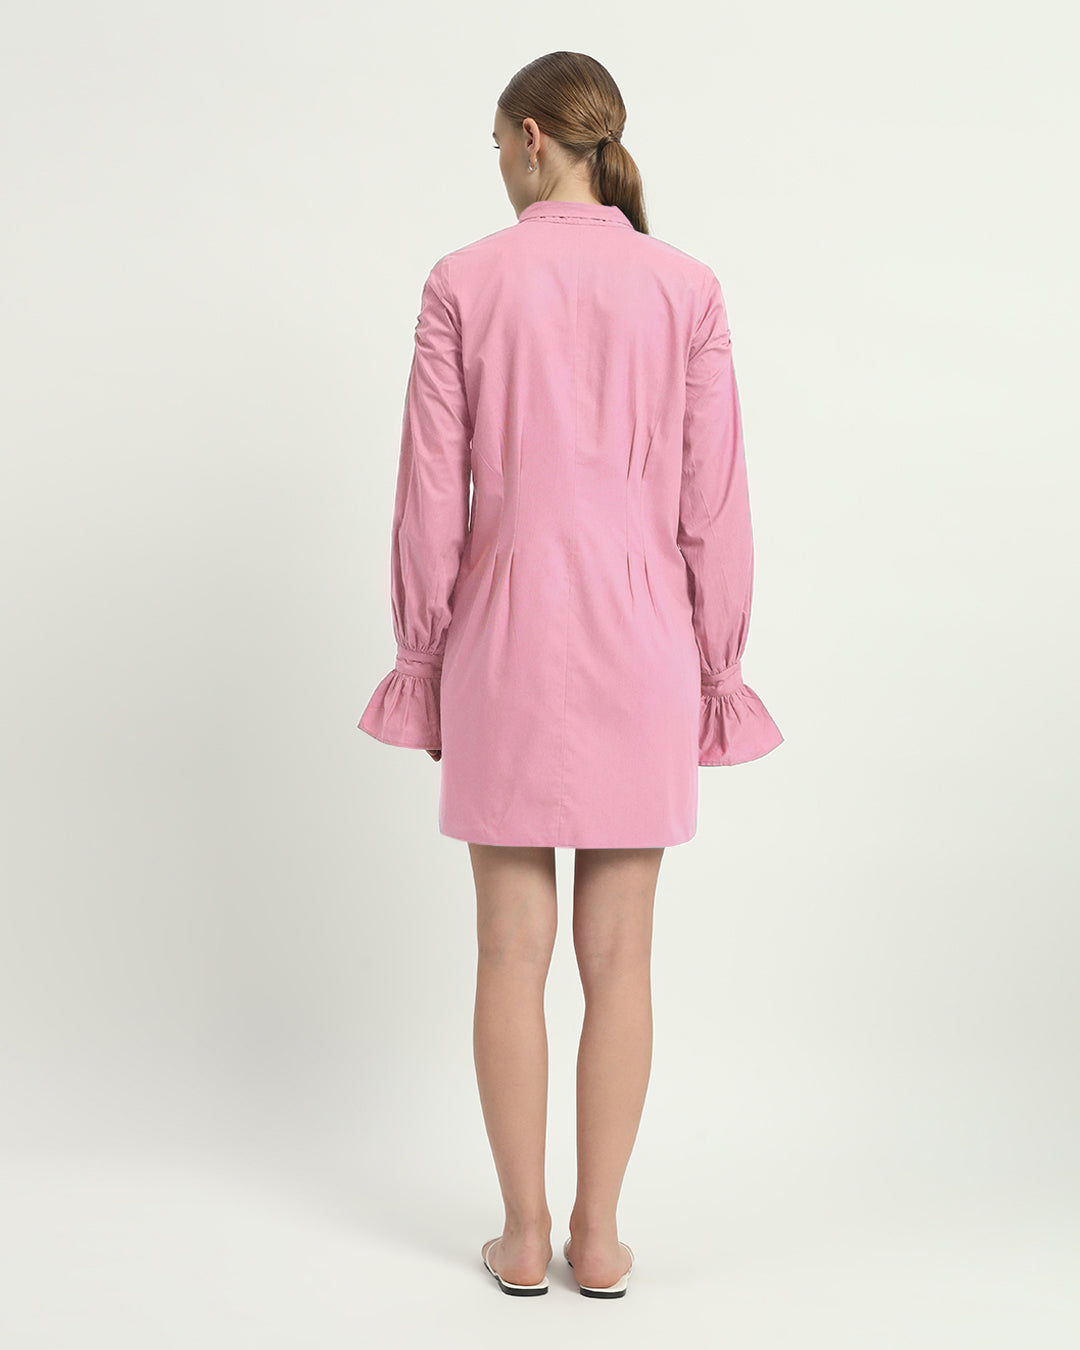 The Sedona Fondant Pink Cotton Dress